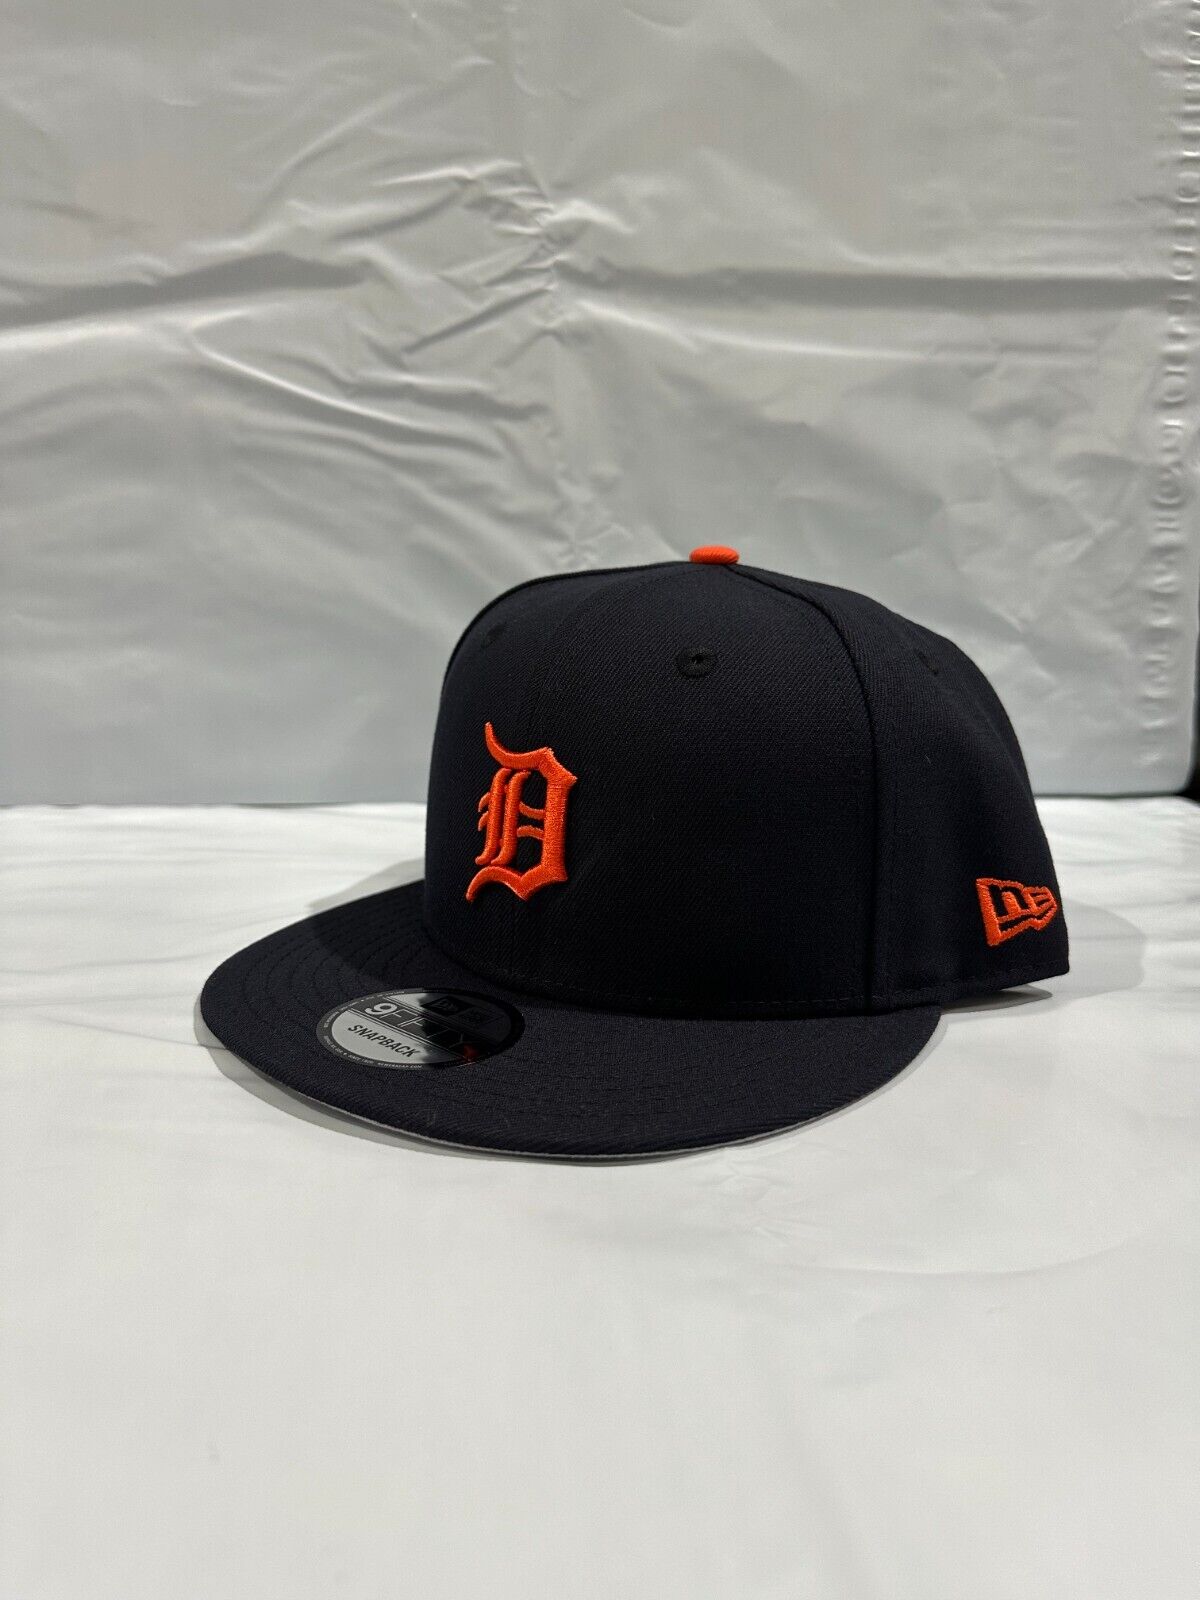 Authentic MLB Detroit Tigers 9FIFTY Adjustable Snap-Back New Era Cap-Navy/Orange